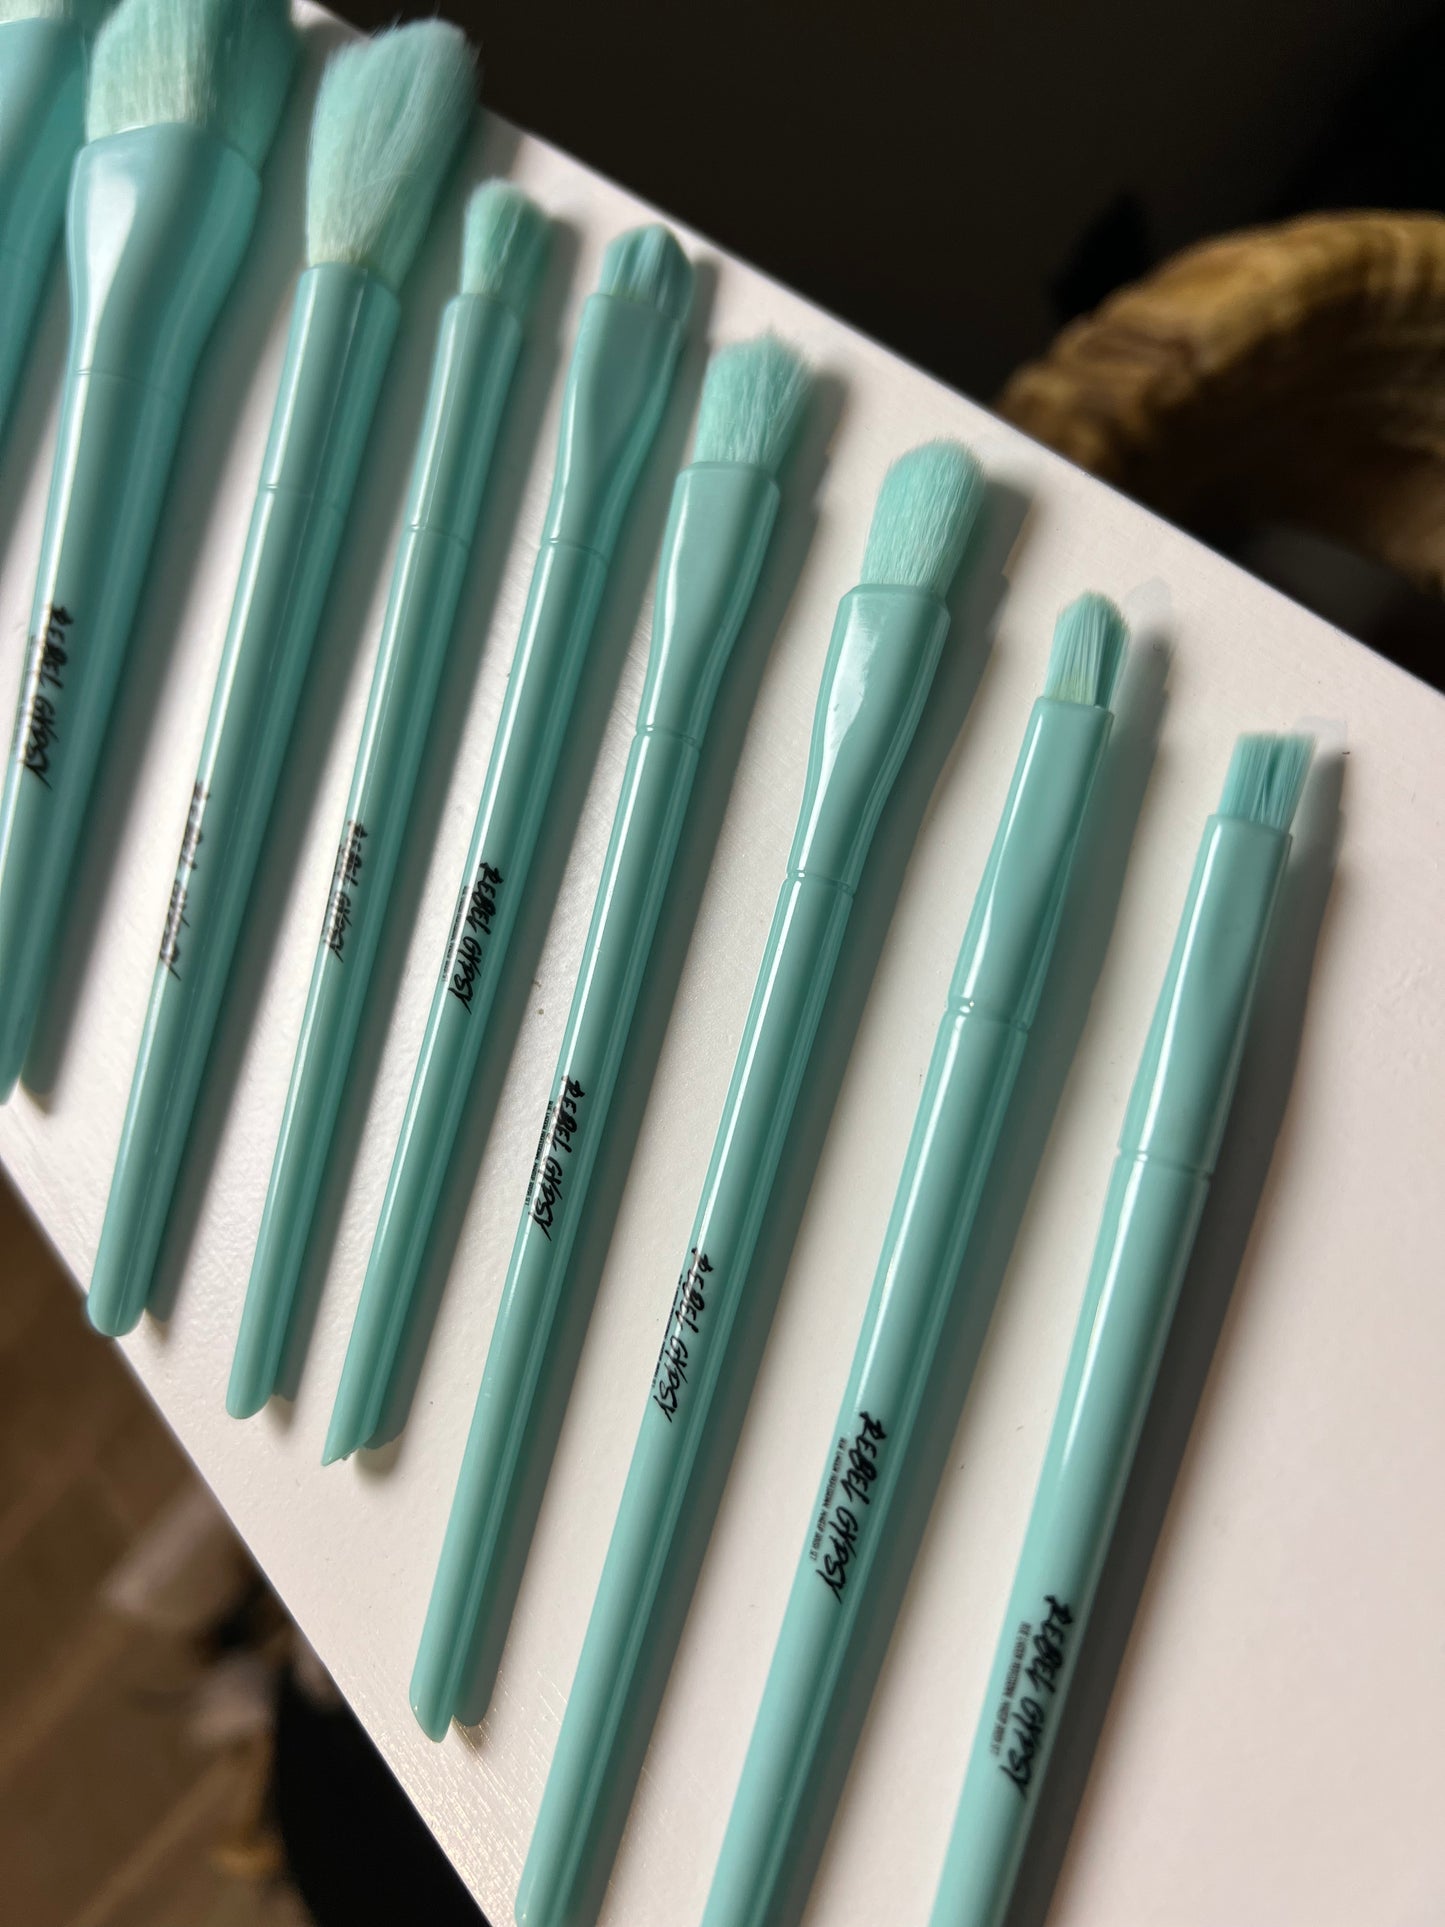 Blue Lagoon Professional Makeup Brush Set